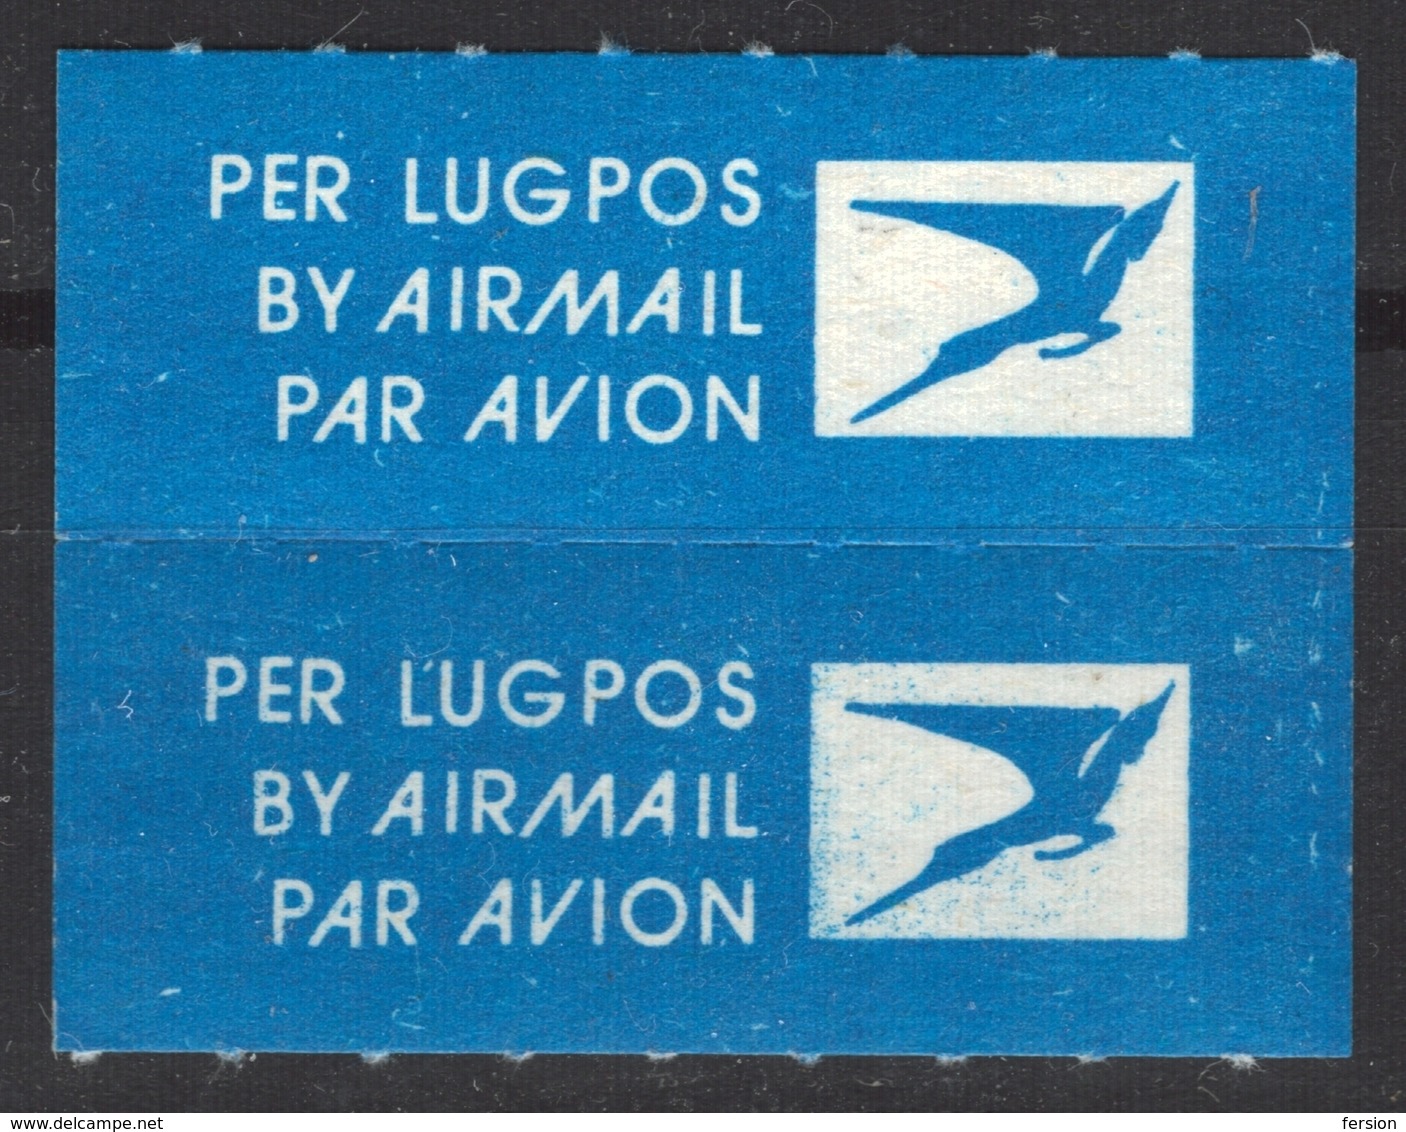 AIR MAIL Par Avion Vignette Label South Africa RSA Not Used - Per Lugpos - Luchtpost